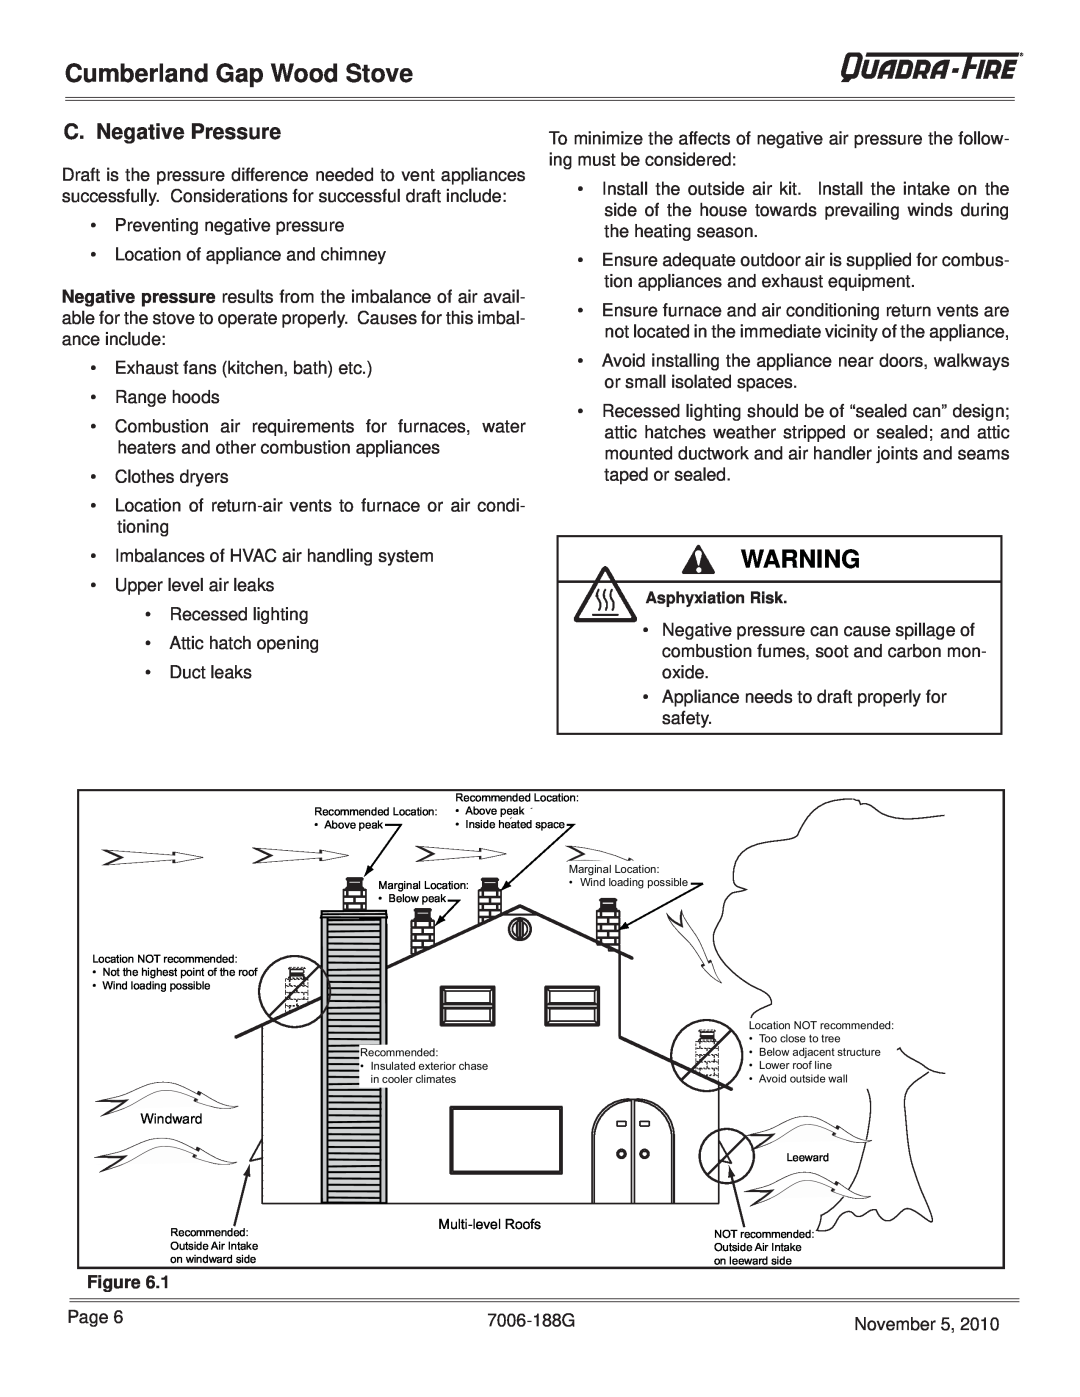 Quadra-Fire CUMPGAP-PMH, CUMBGAP-MBK warranty C. Negative Pressure, Cumberland Gap Wood Stove 